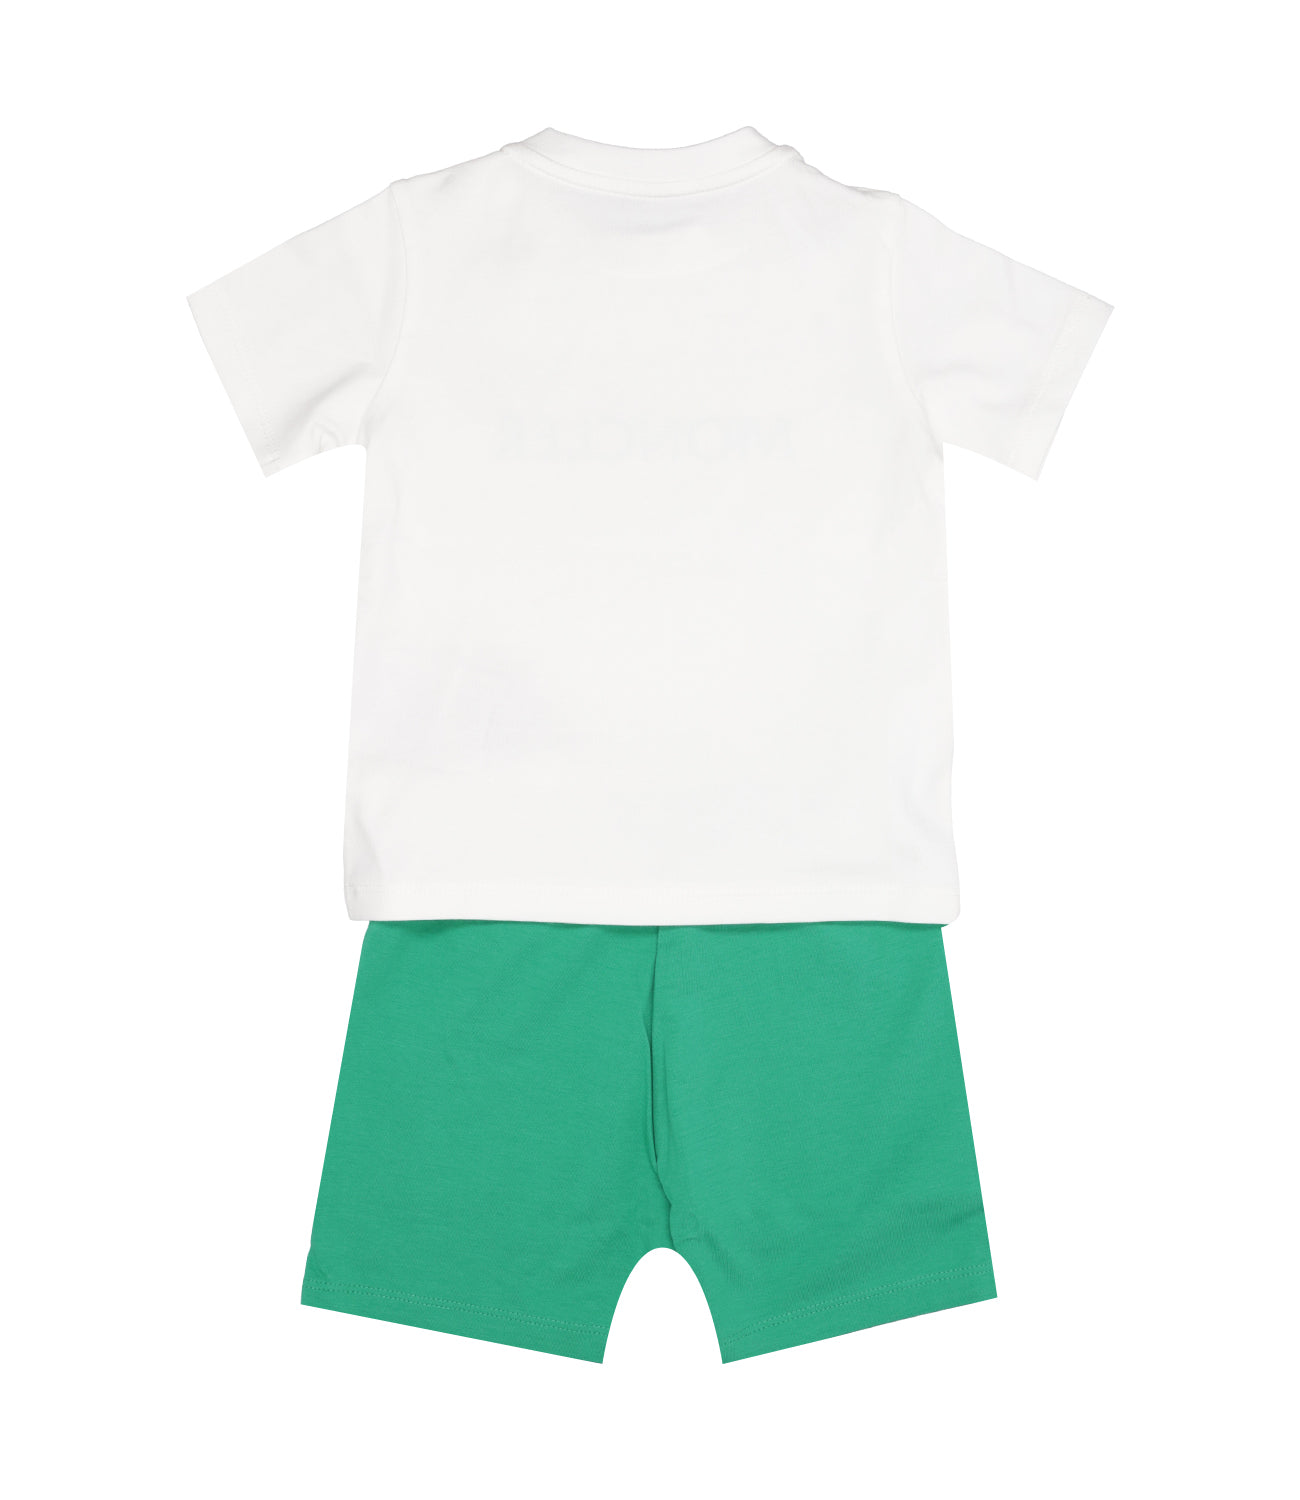 Moncler Junior | Ense Sweater and Bermuda Shorts Set White and Green